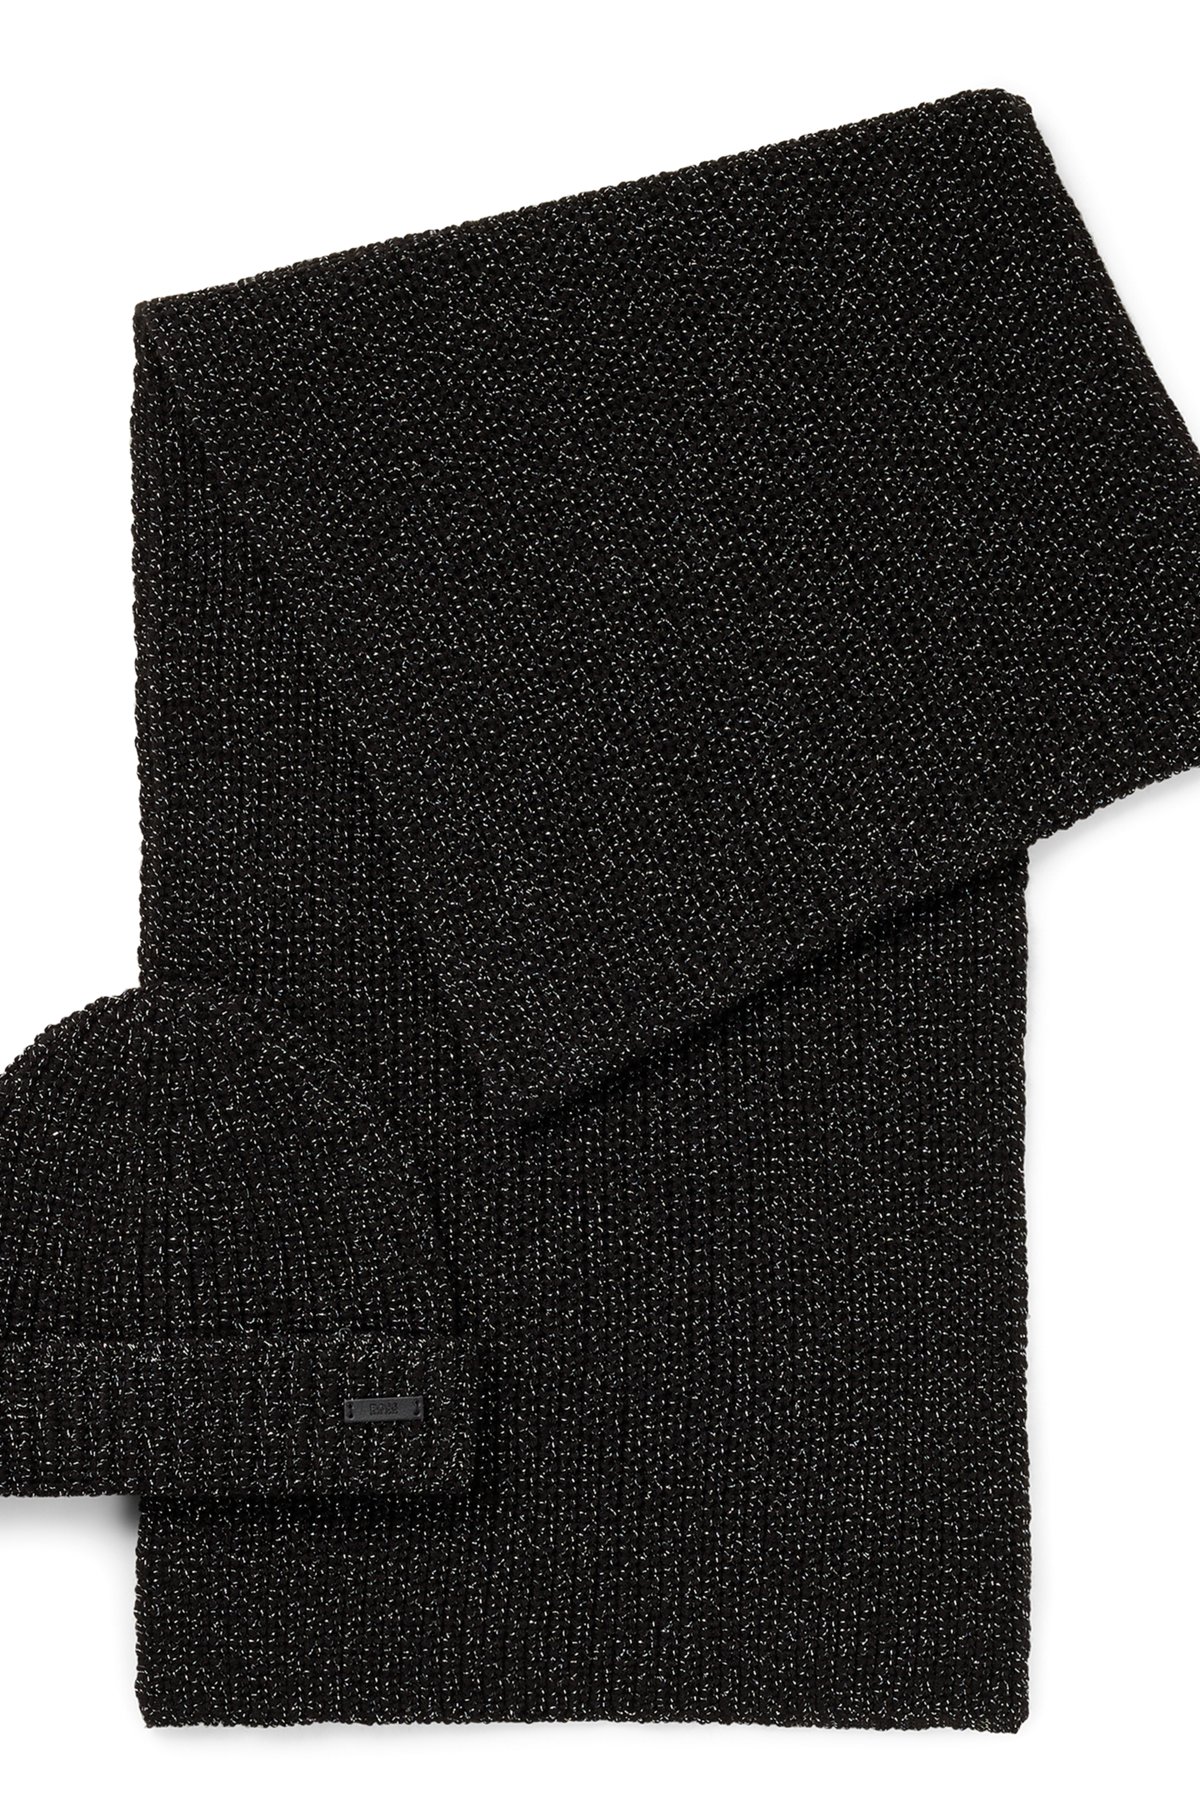 Beanie hat and scarf set in metallised fabric, Black